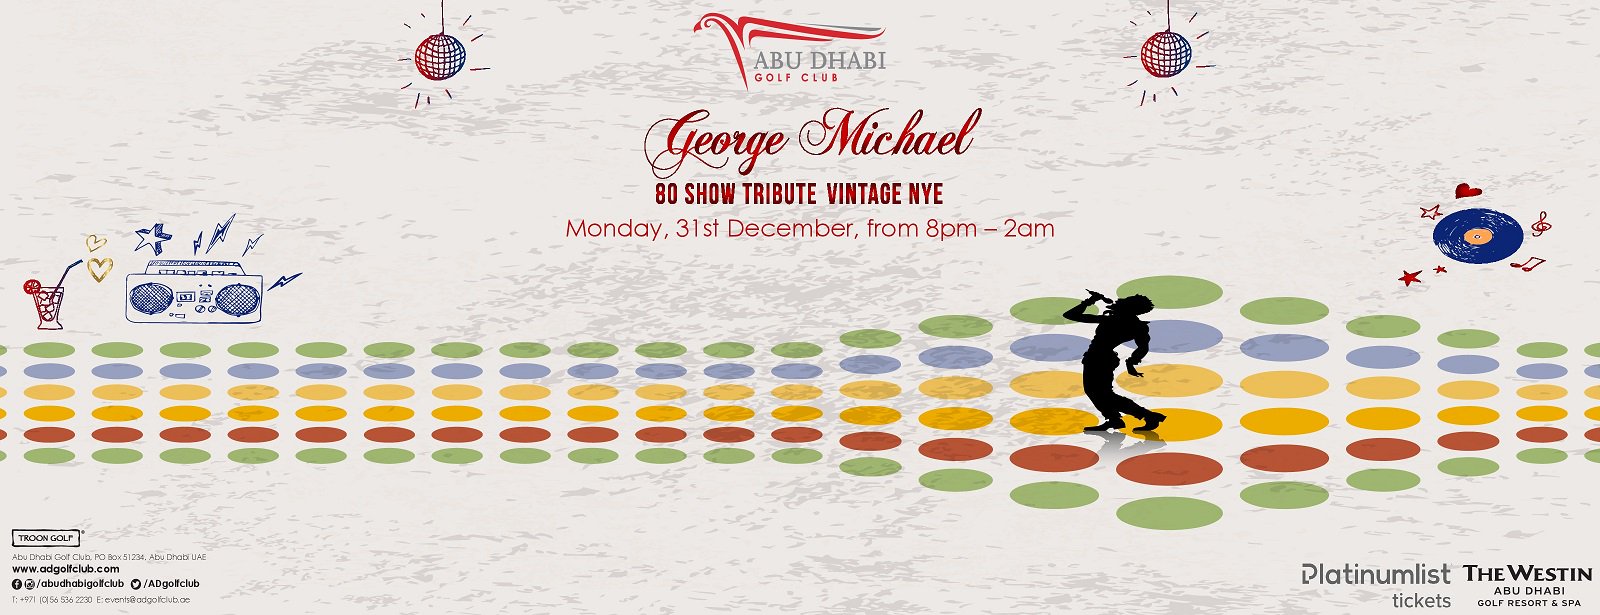 George Michael 80 Show Tribute Vintage NYE at Abu Dhabi Golf Club - Coming Soon in UAE